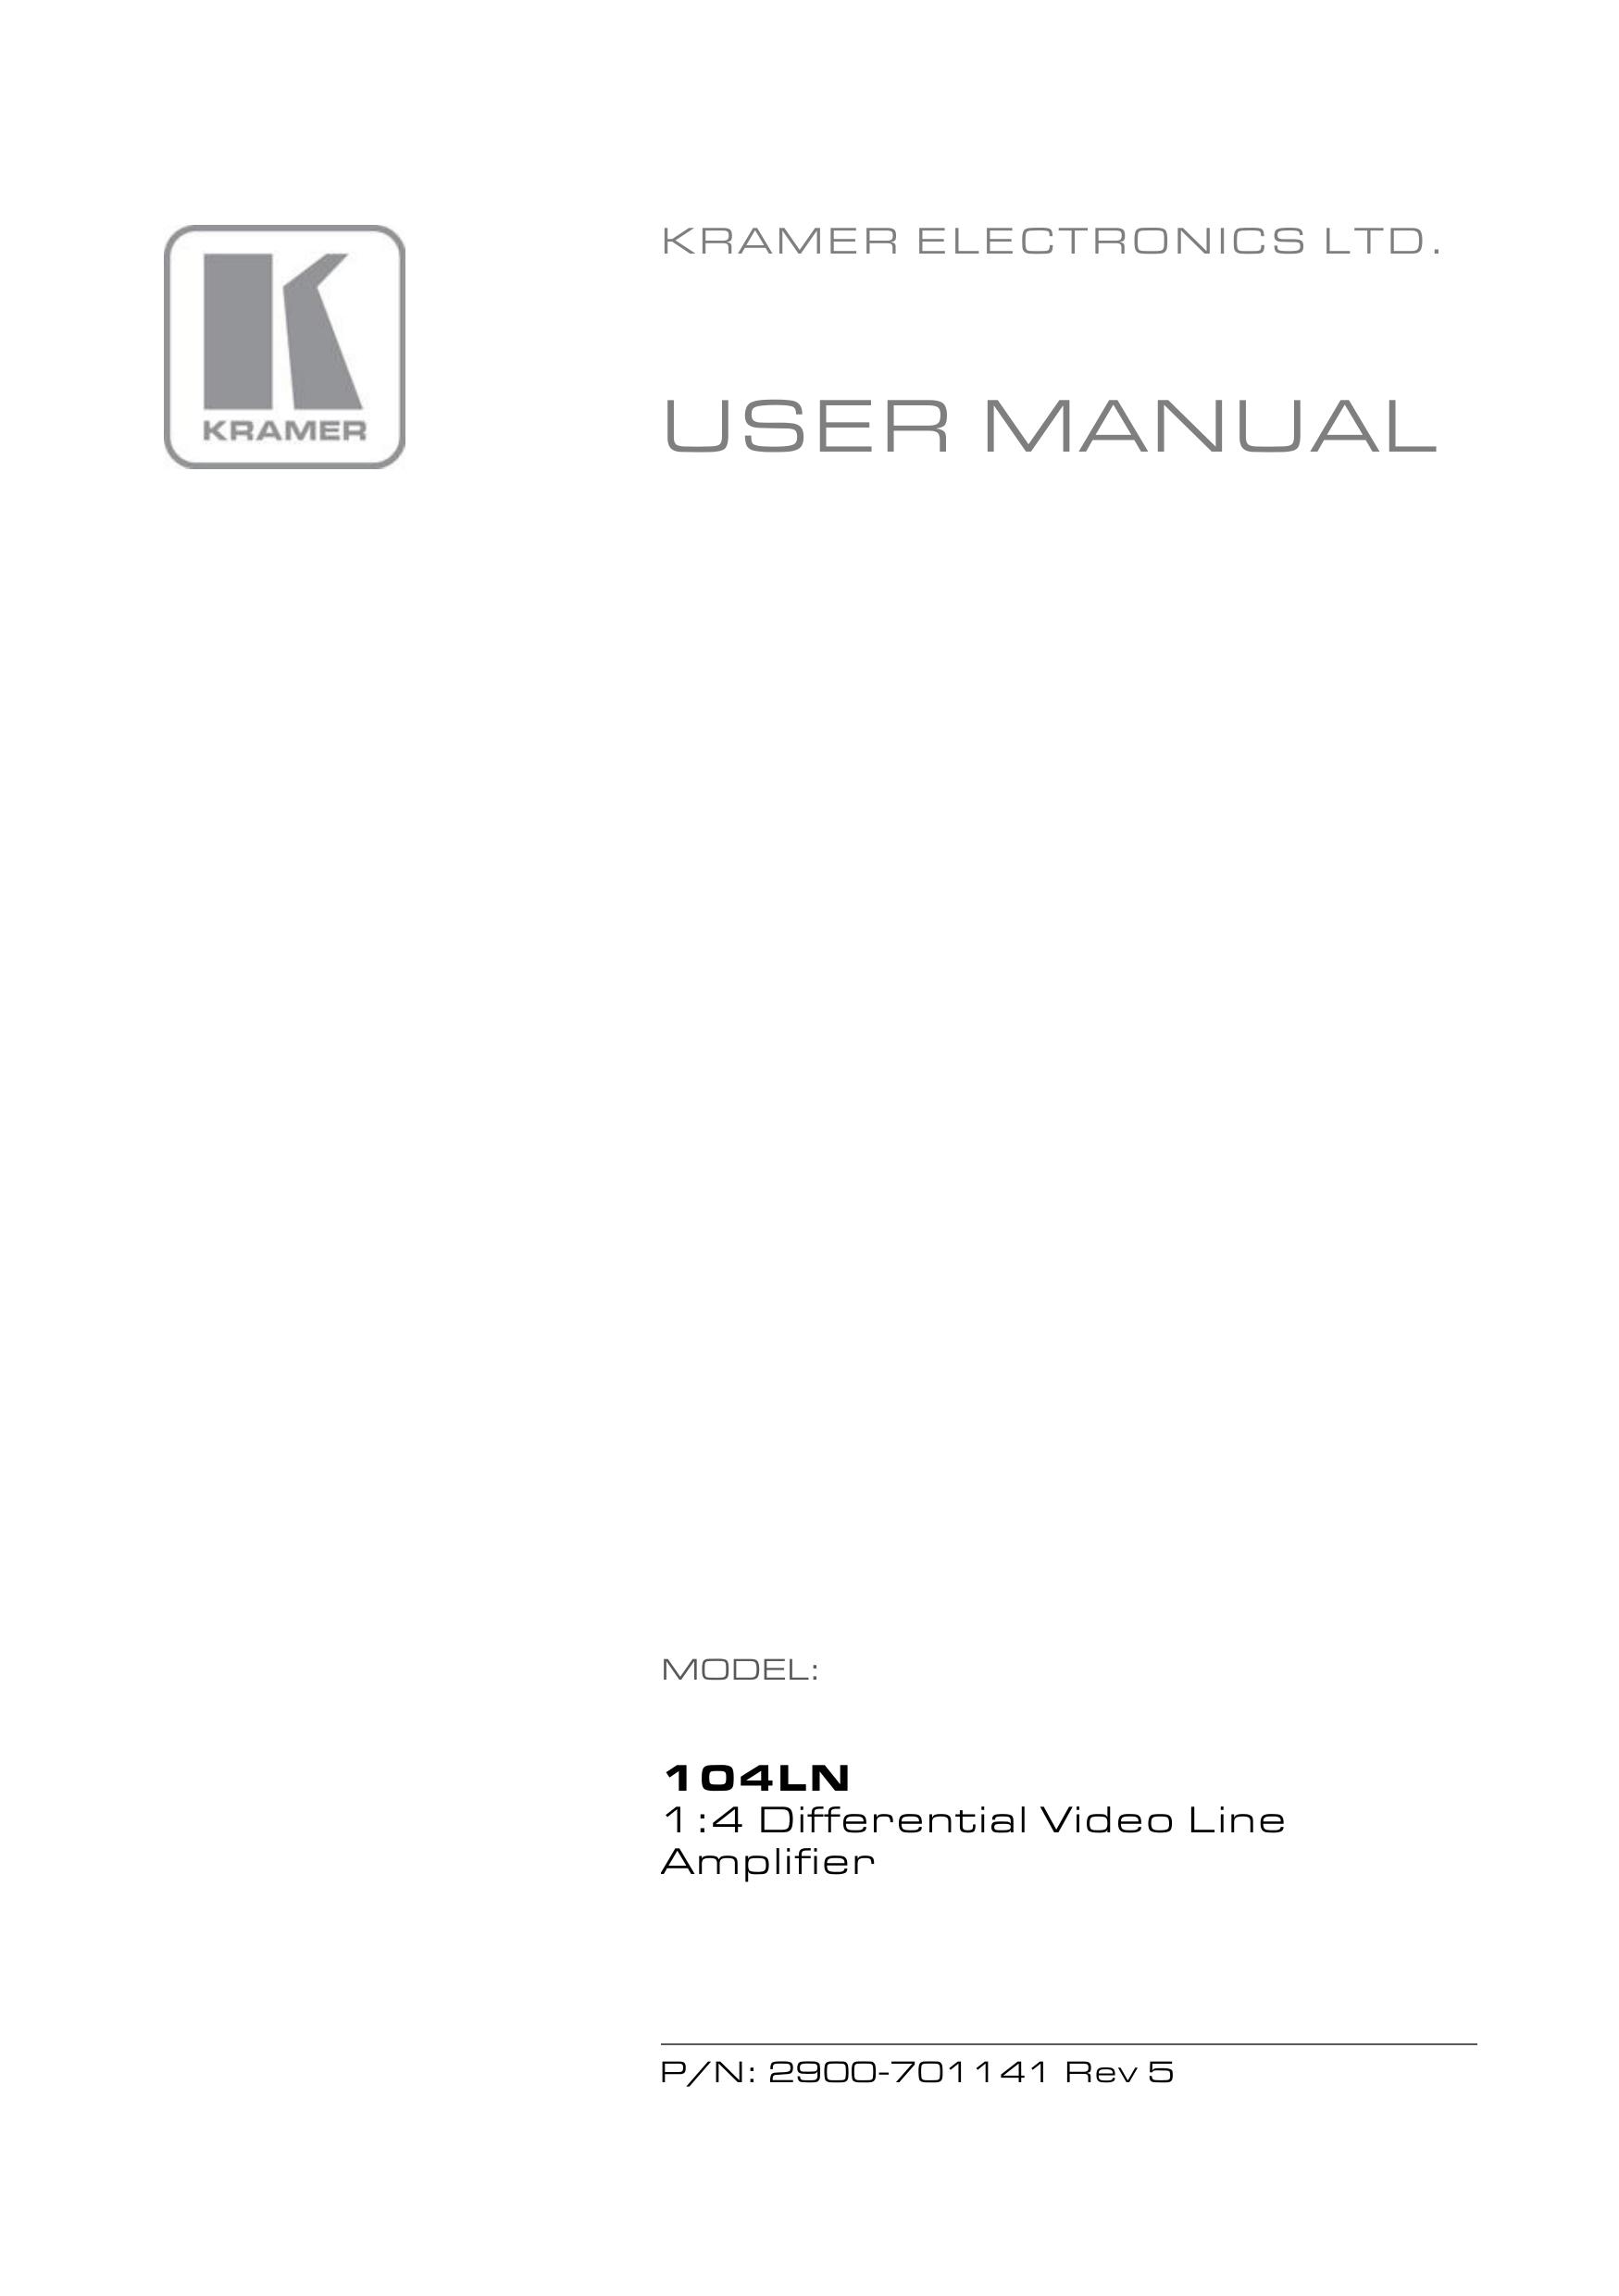 Kramer Electronics 104LN Camcorder User Manual